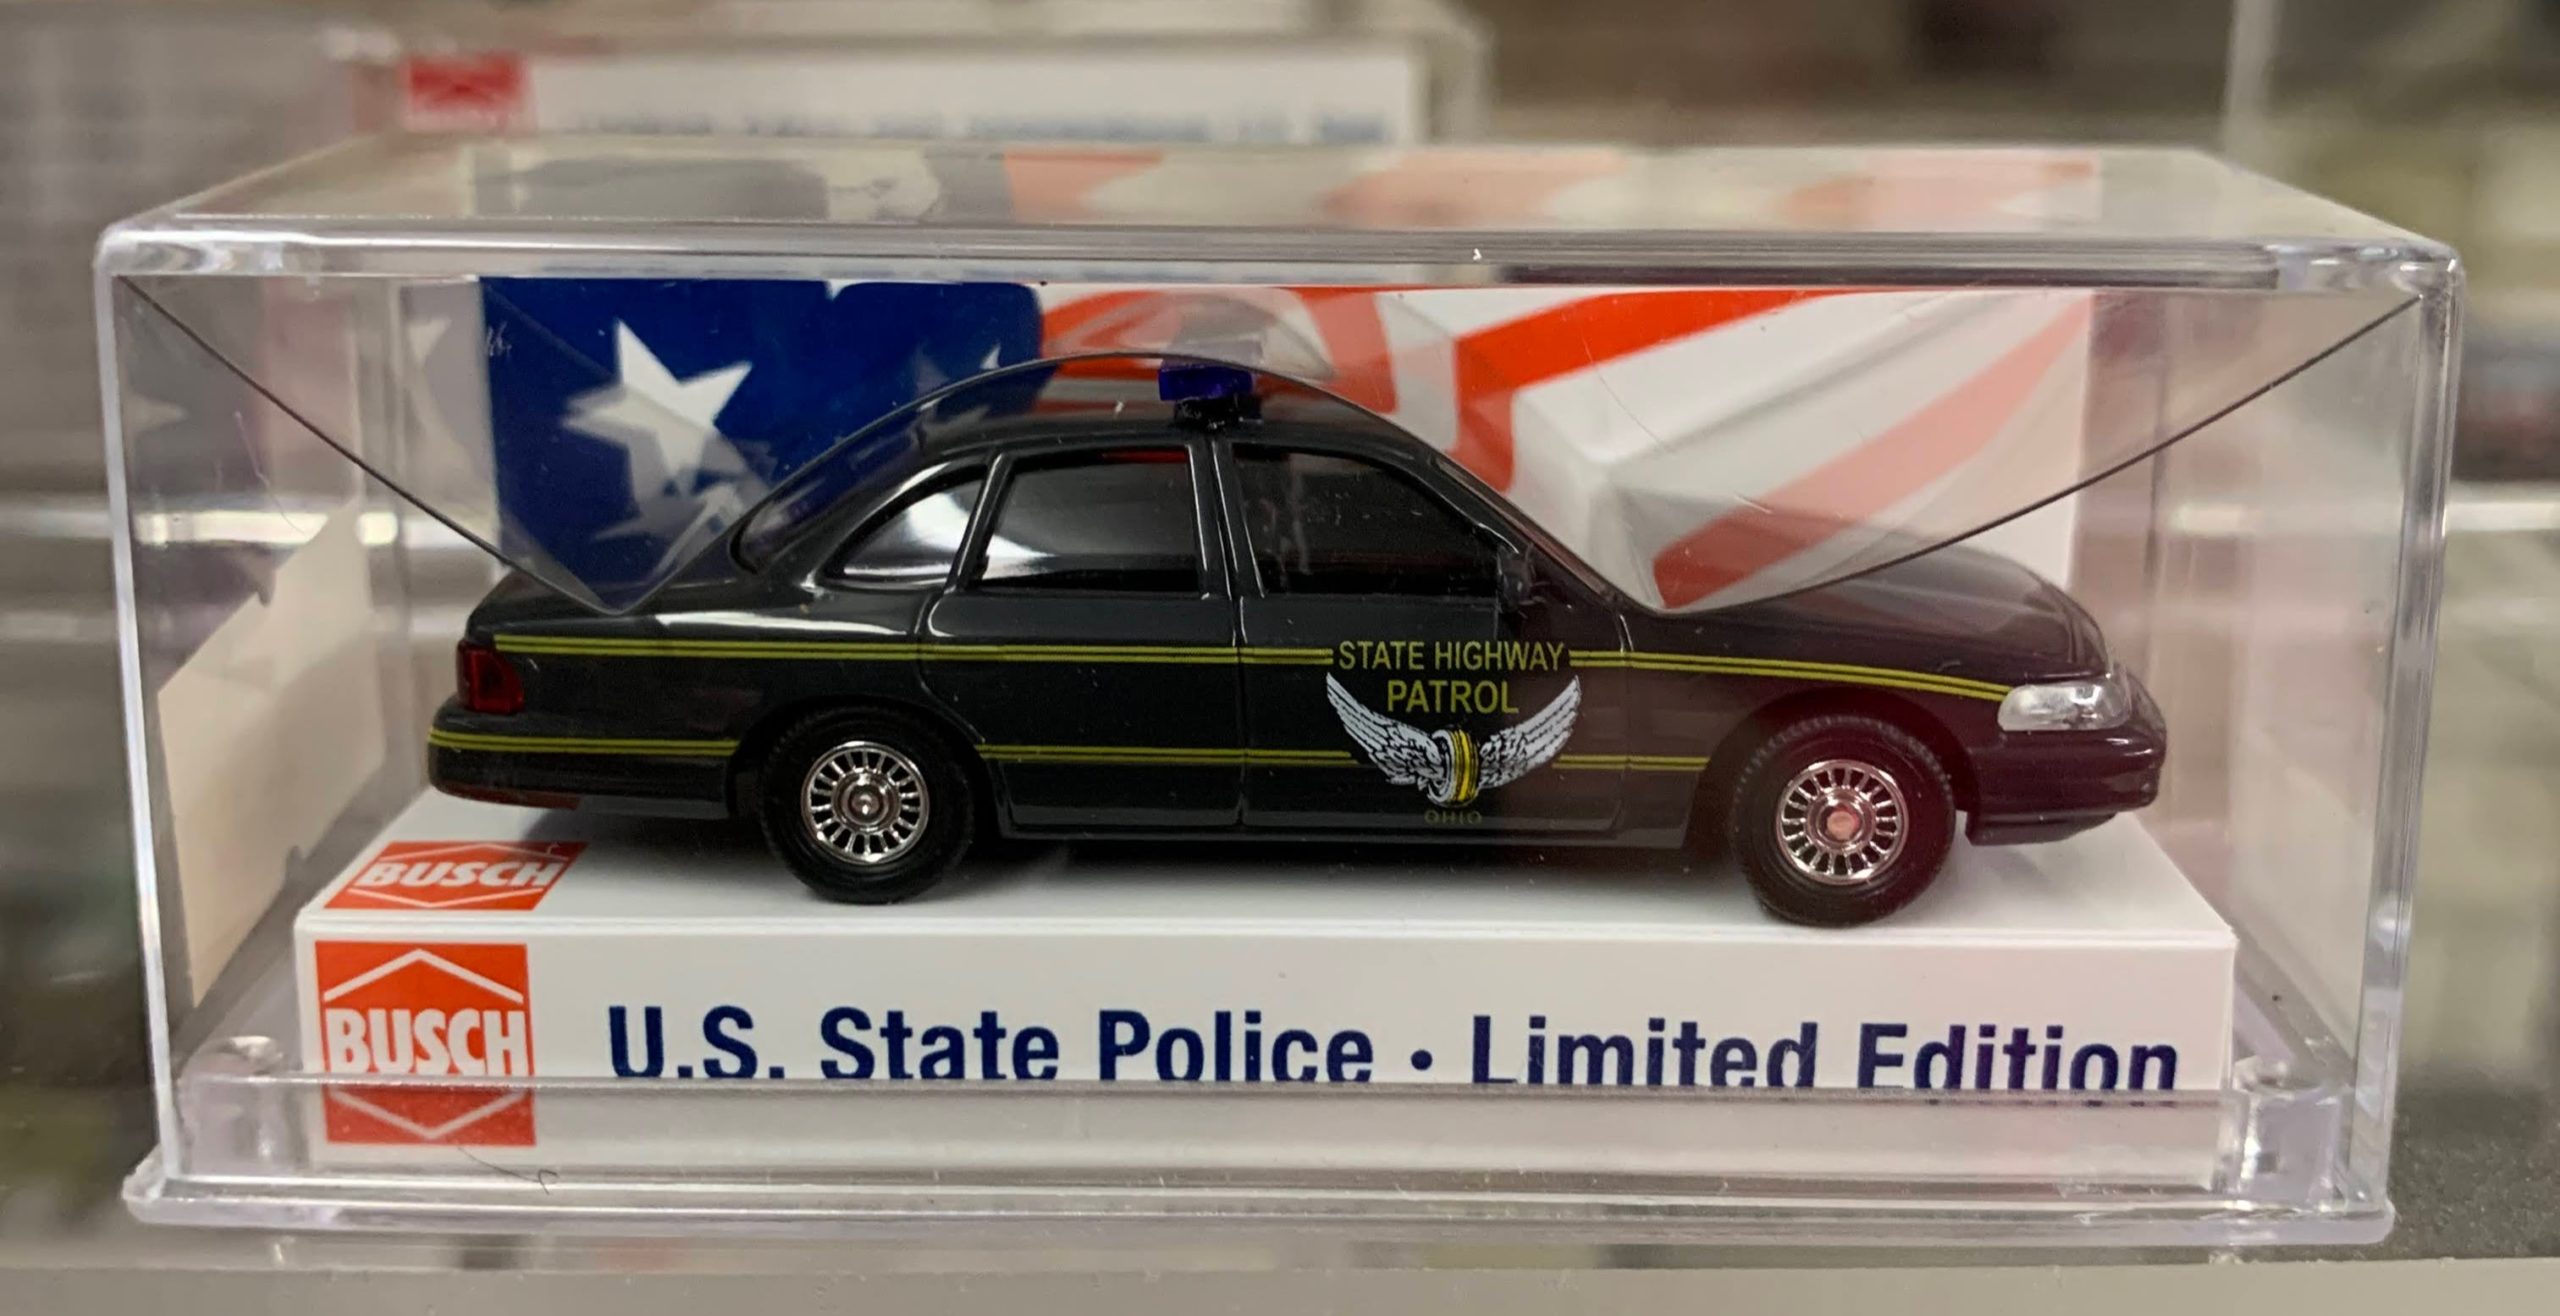 U.S. State Police Series - Ohio